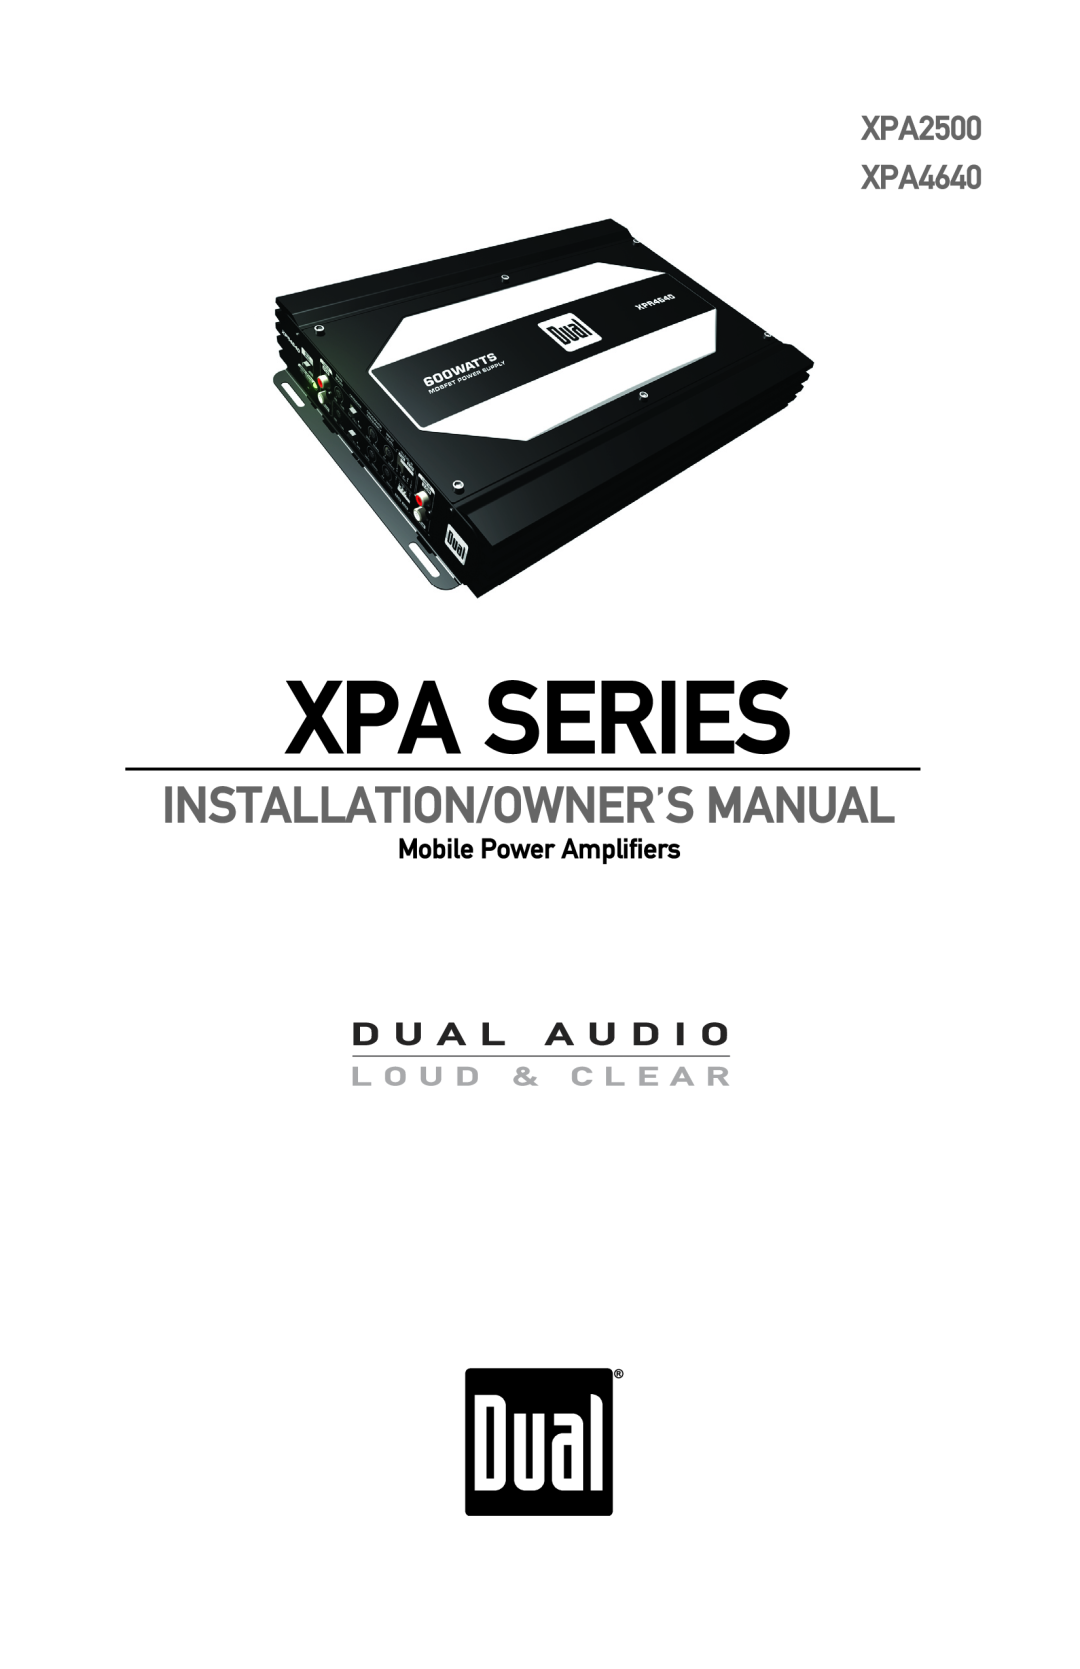 Dual owner manual XPA2500 XPA4640, Mobile Power Amplifiers, Xpa Series, Installation/Owner’S Manual 